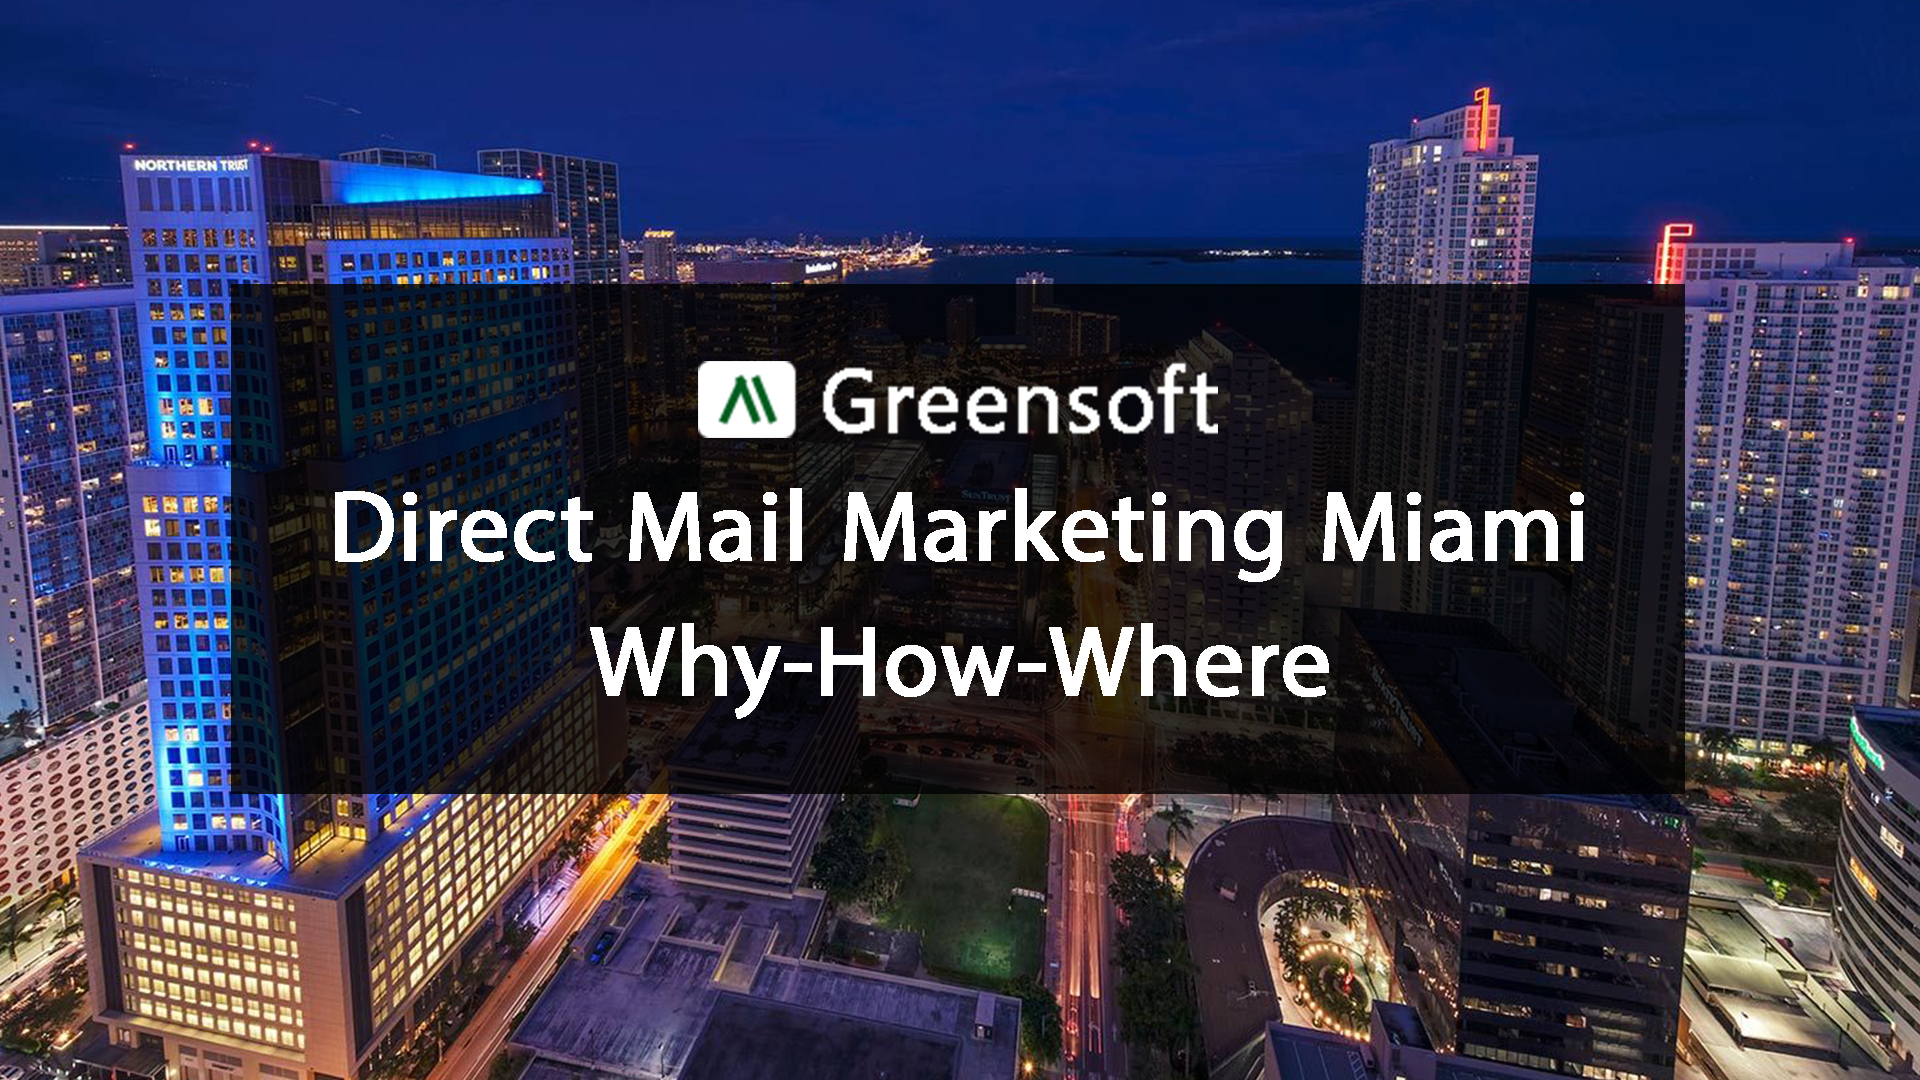 Direct mail marketing Miami, greensoft dhaka